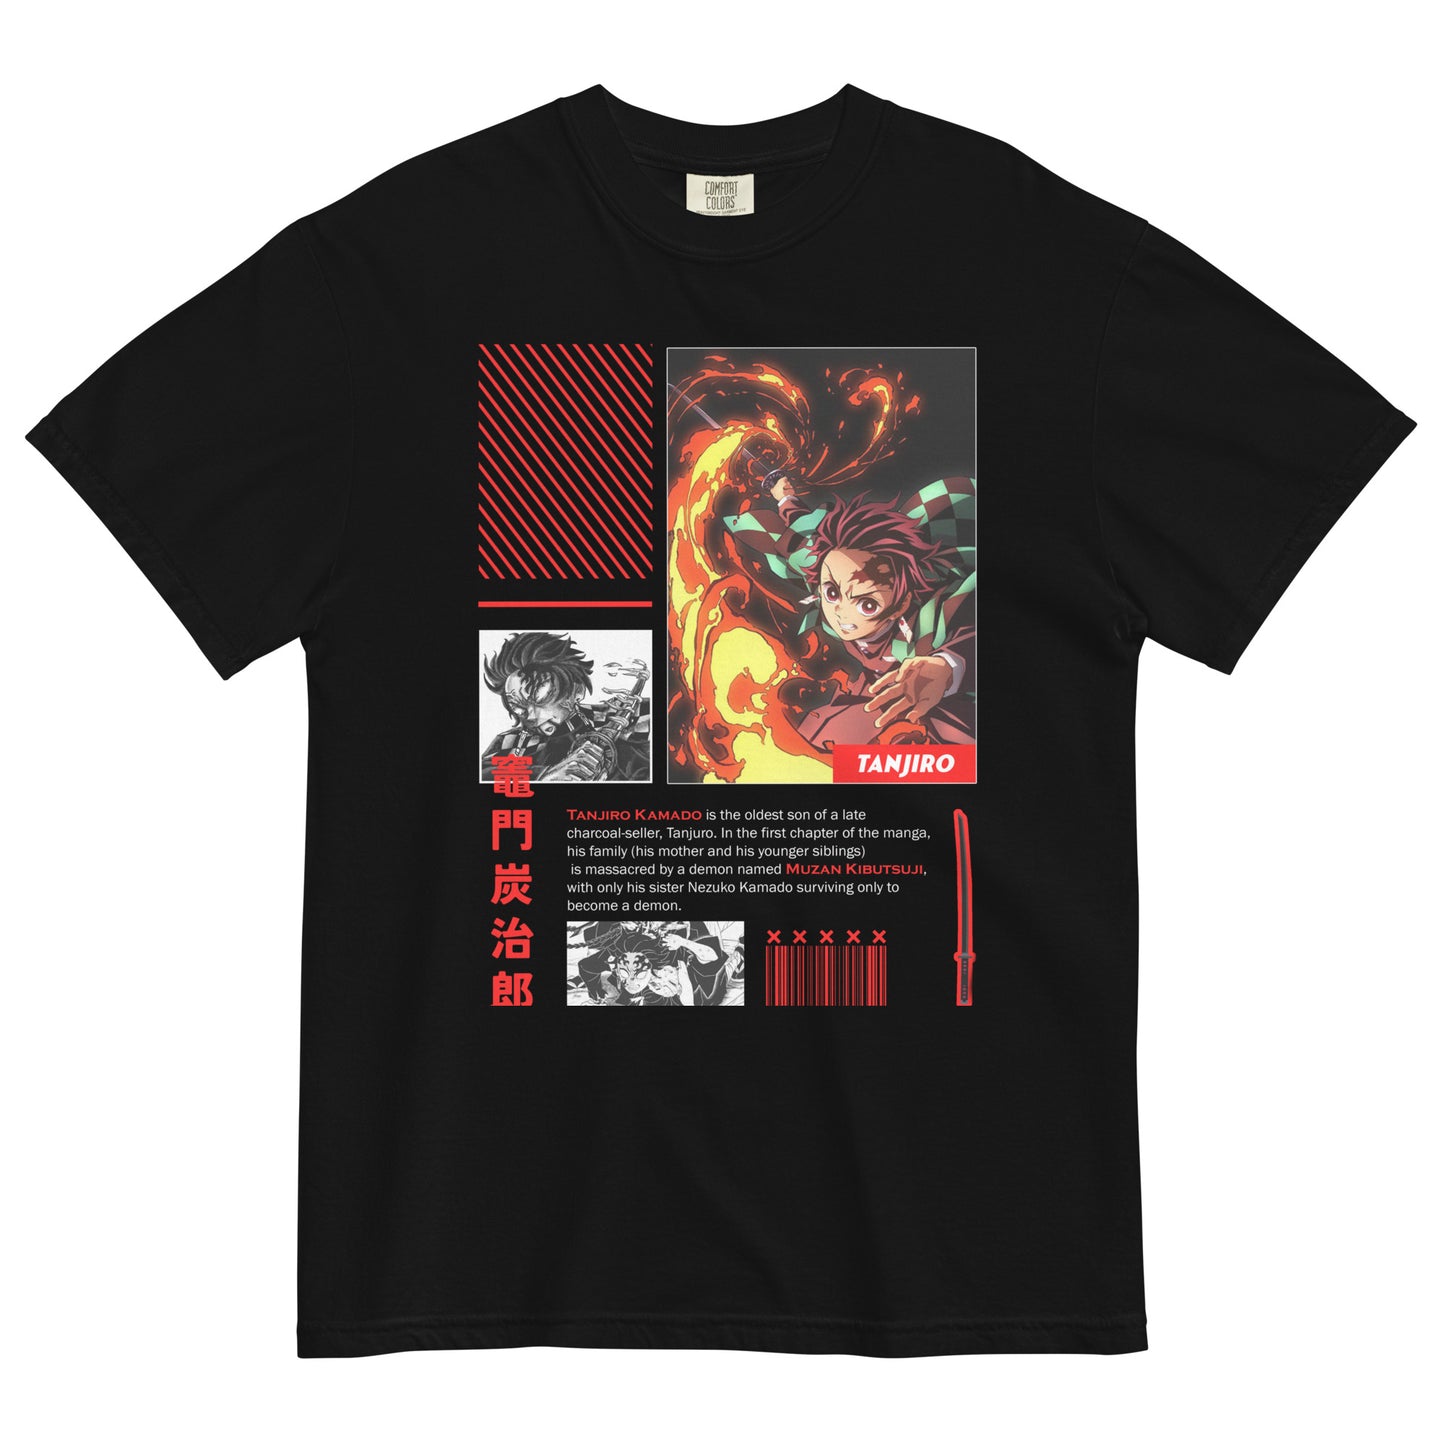 Epic Tanjiro Fire Breathing Dragon Slayer Anime T-Shirt